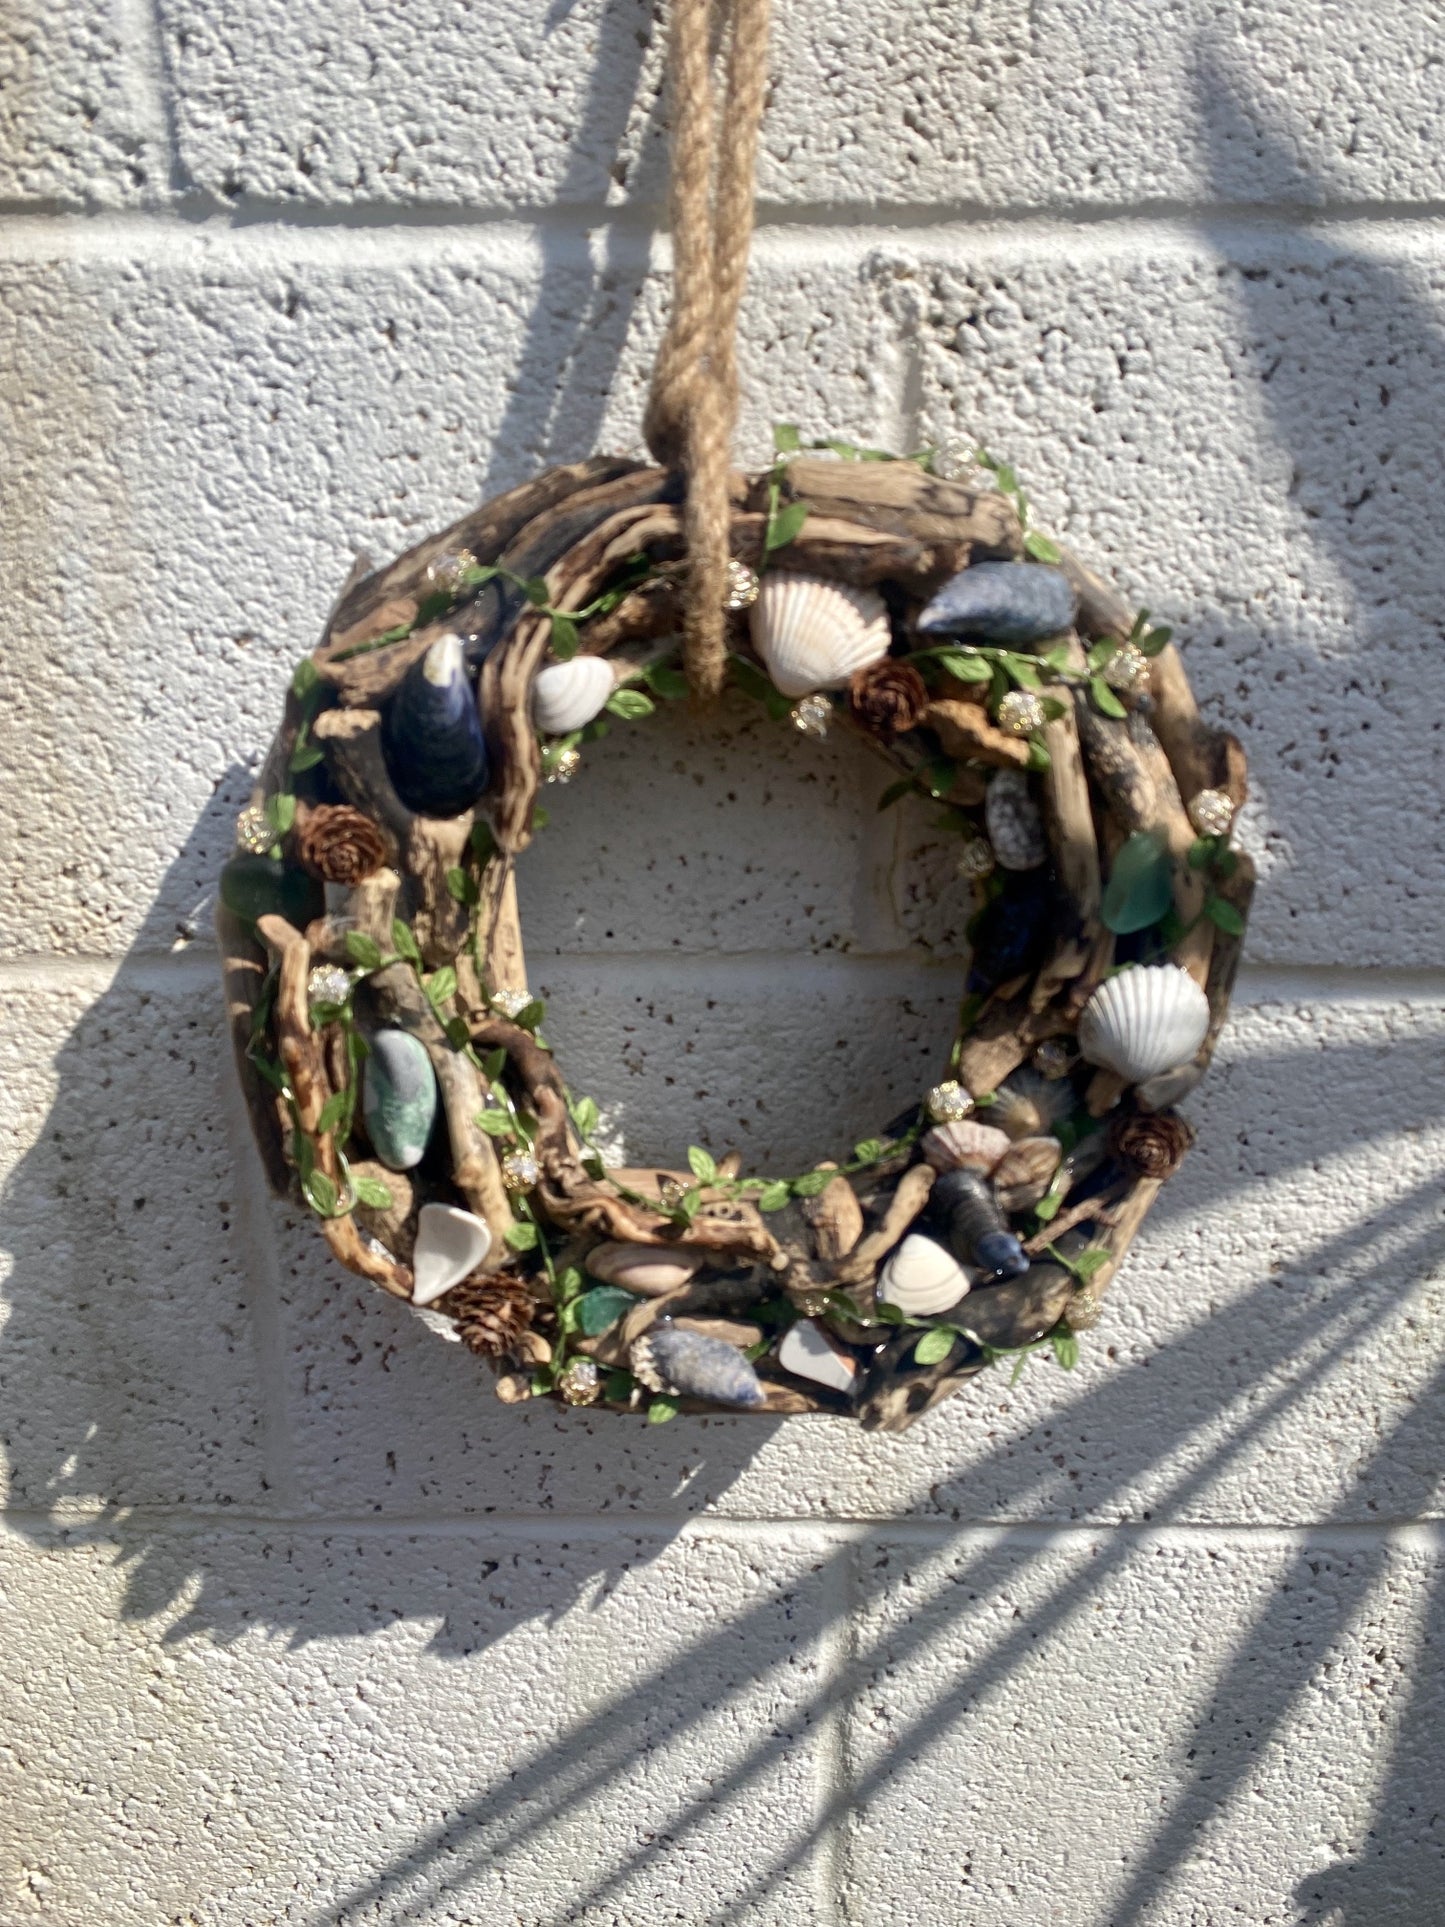 Wreath w/ Shells and Vine Detailing